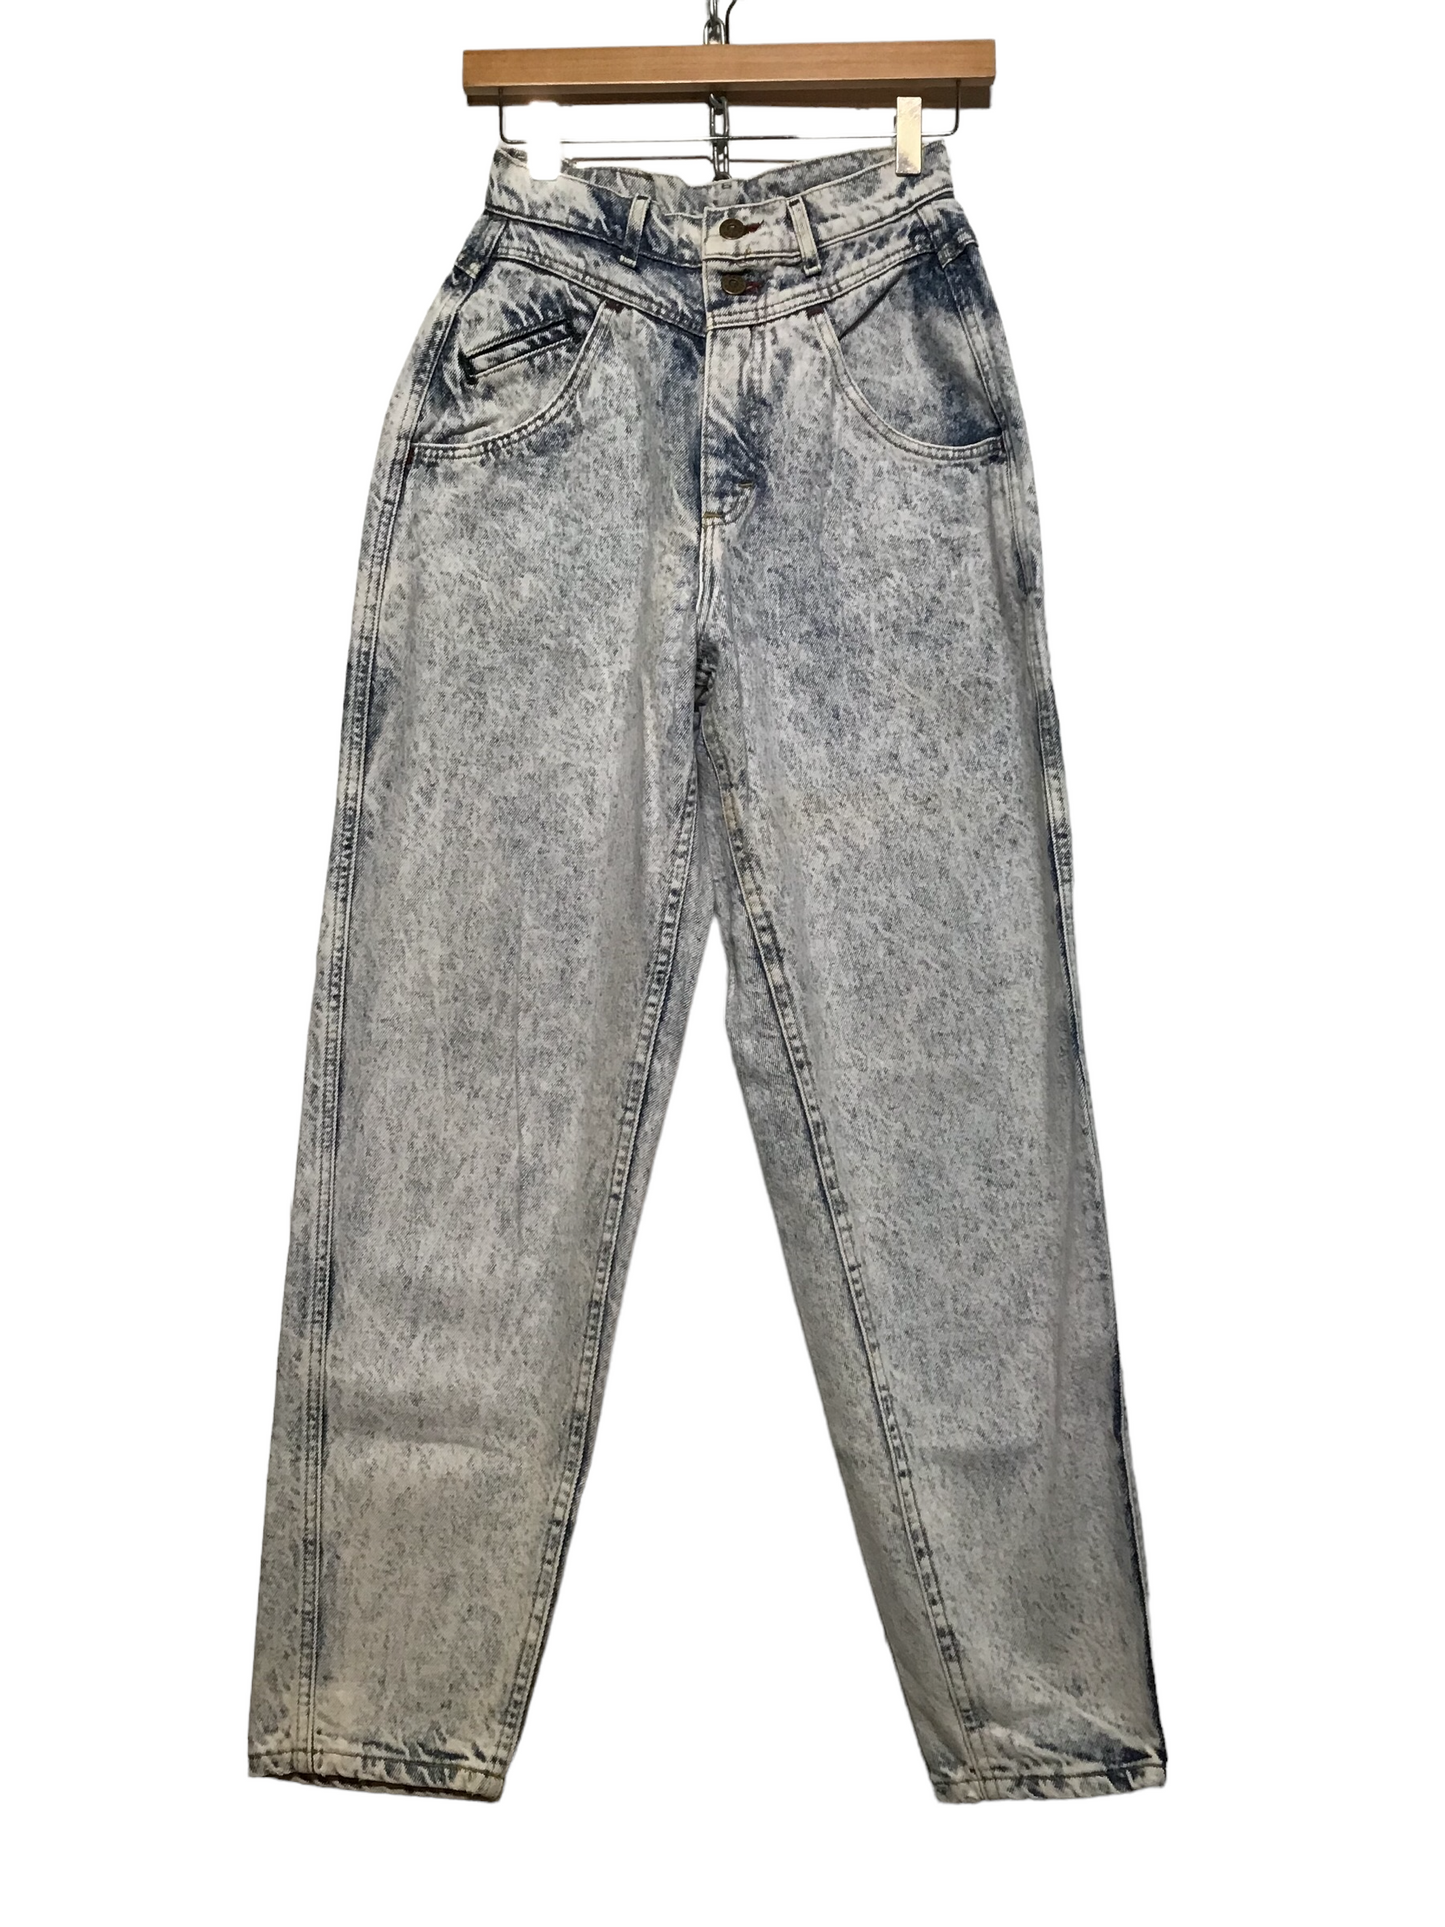 Lee High Waisted Jeans (26X29)